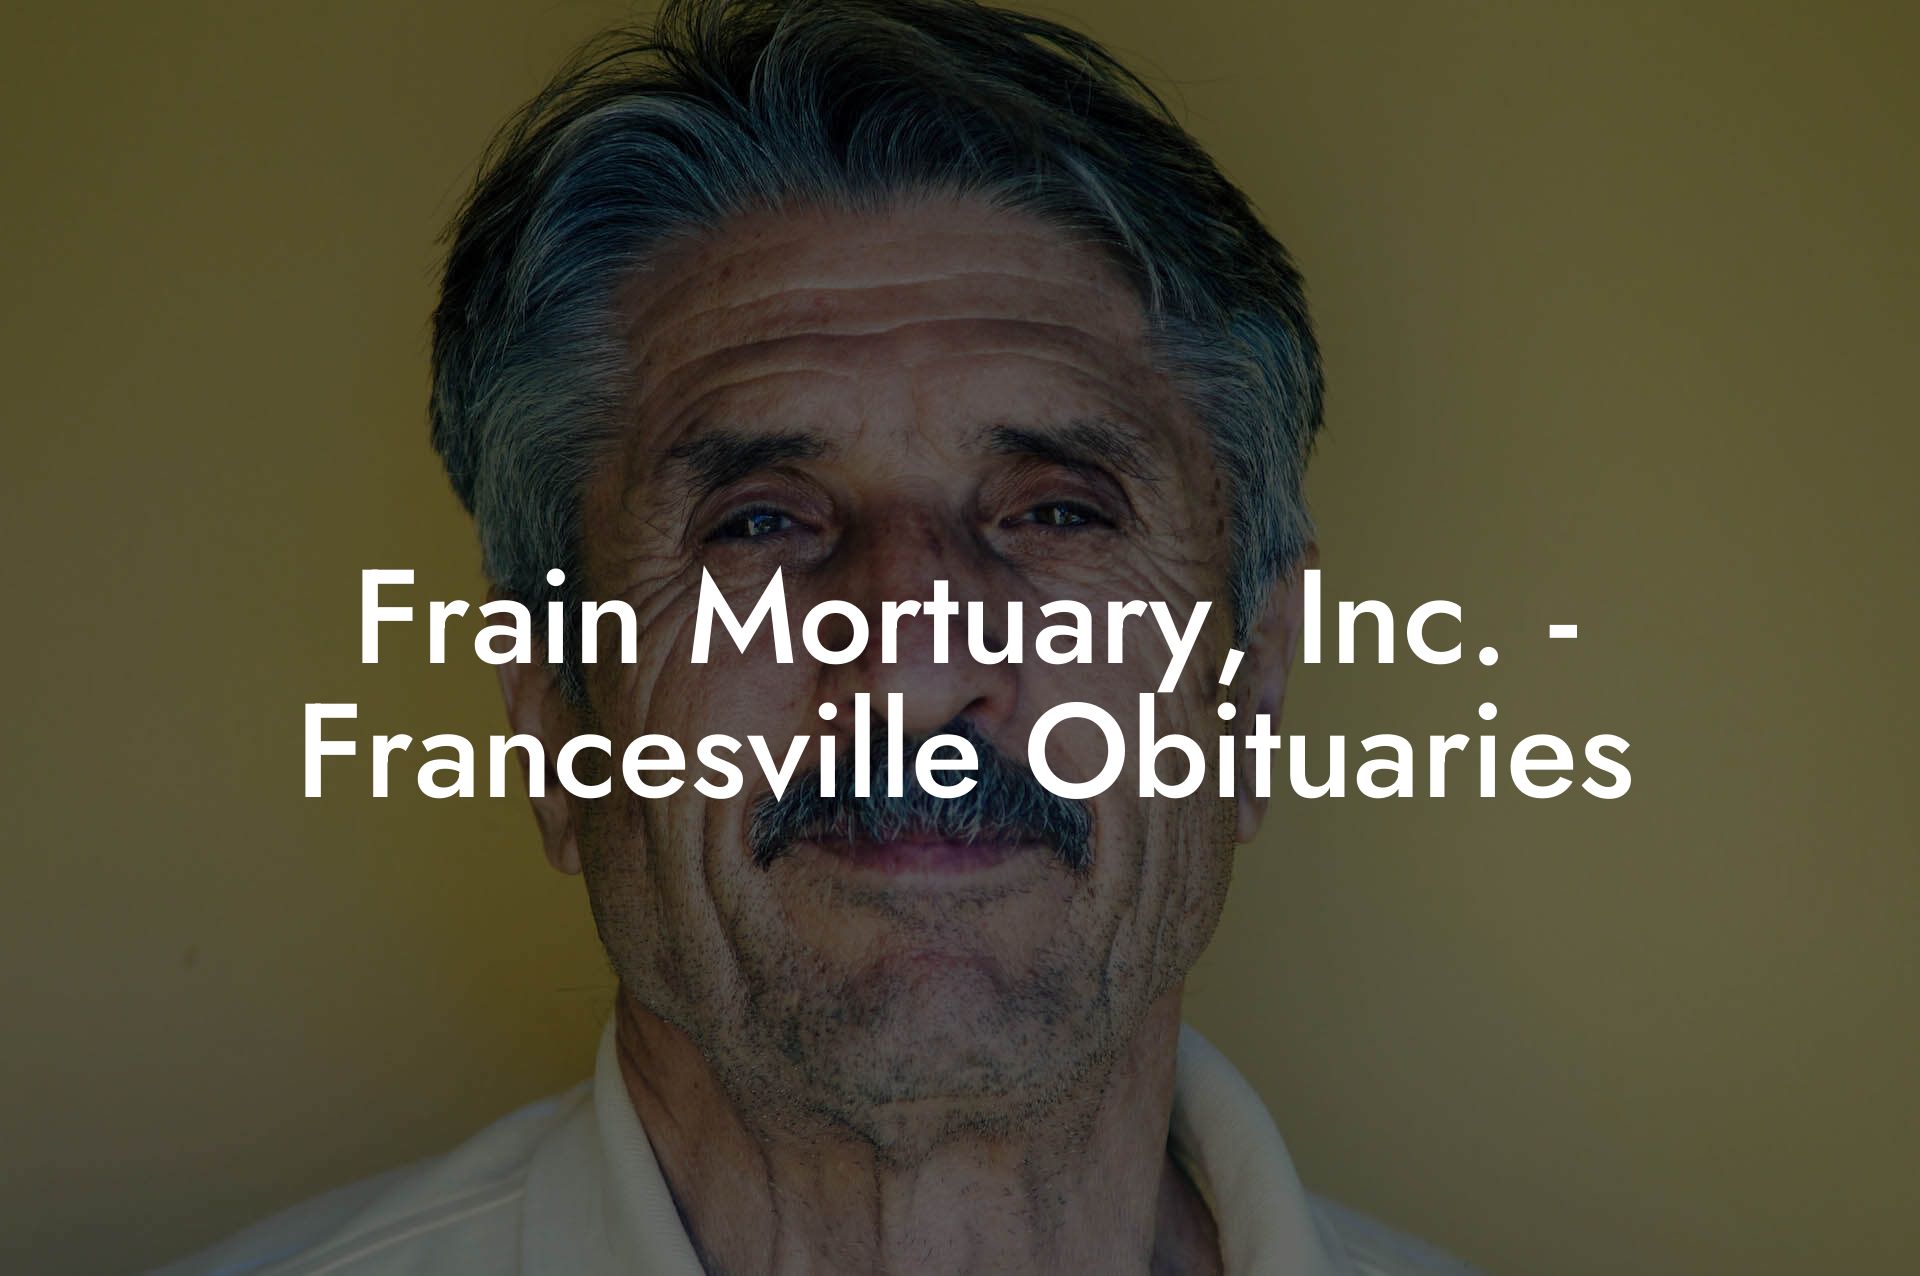 Frain Mortuary, Inc. - Francesville Obituaries